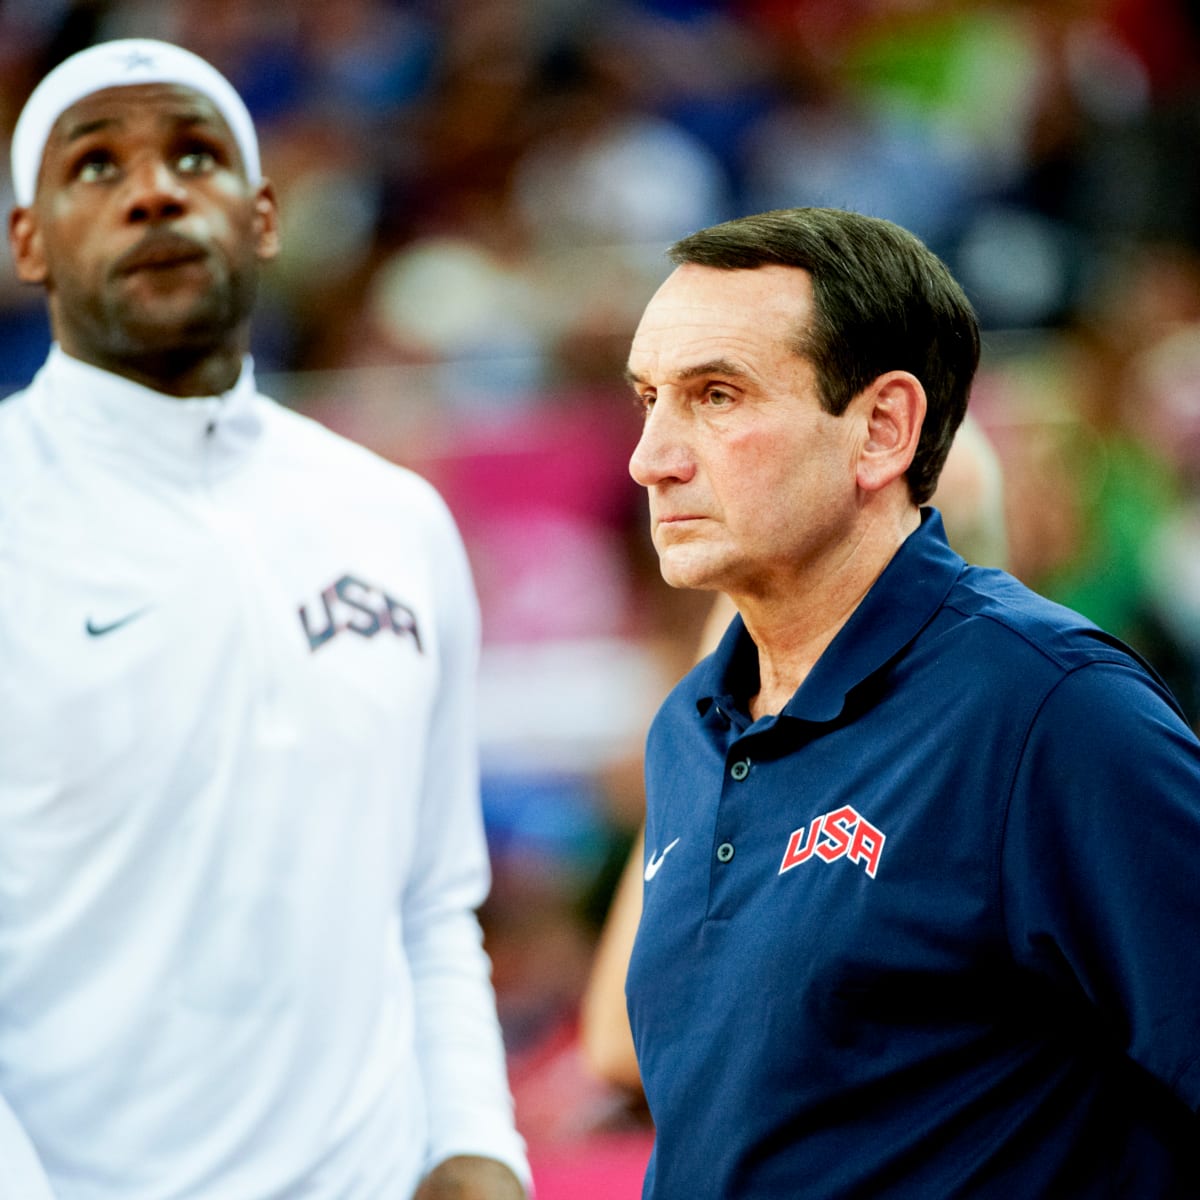 Nike Gave Team USA's 2016 Olympic Basketball Uniforms One Important  Overhaul